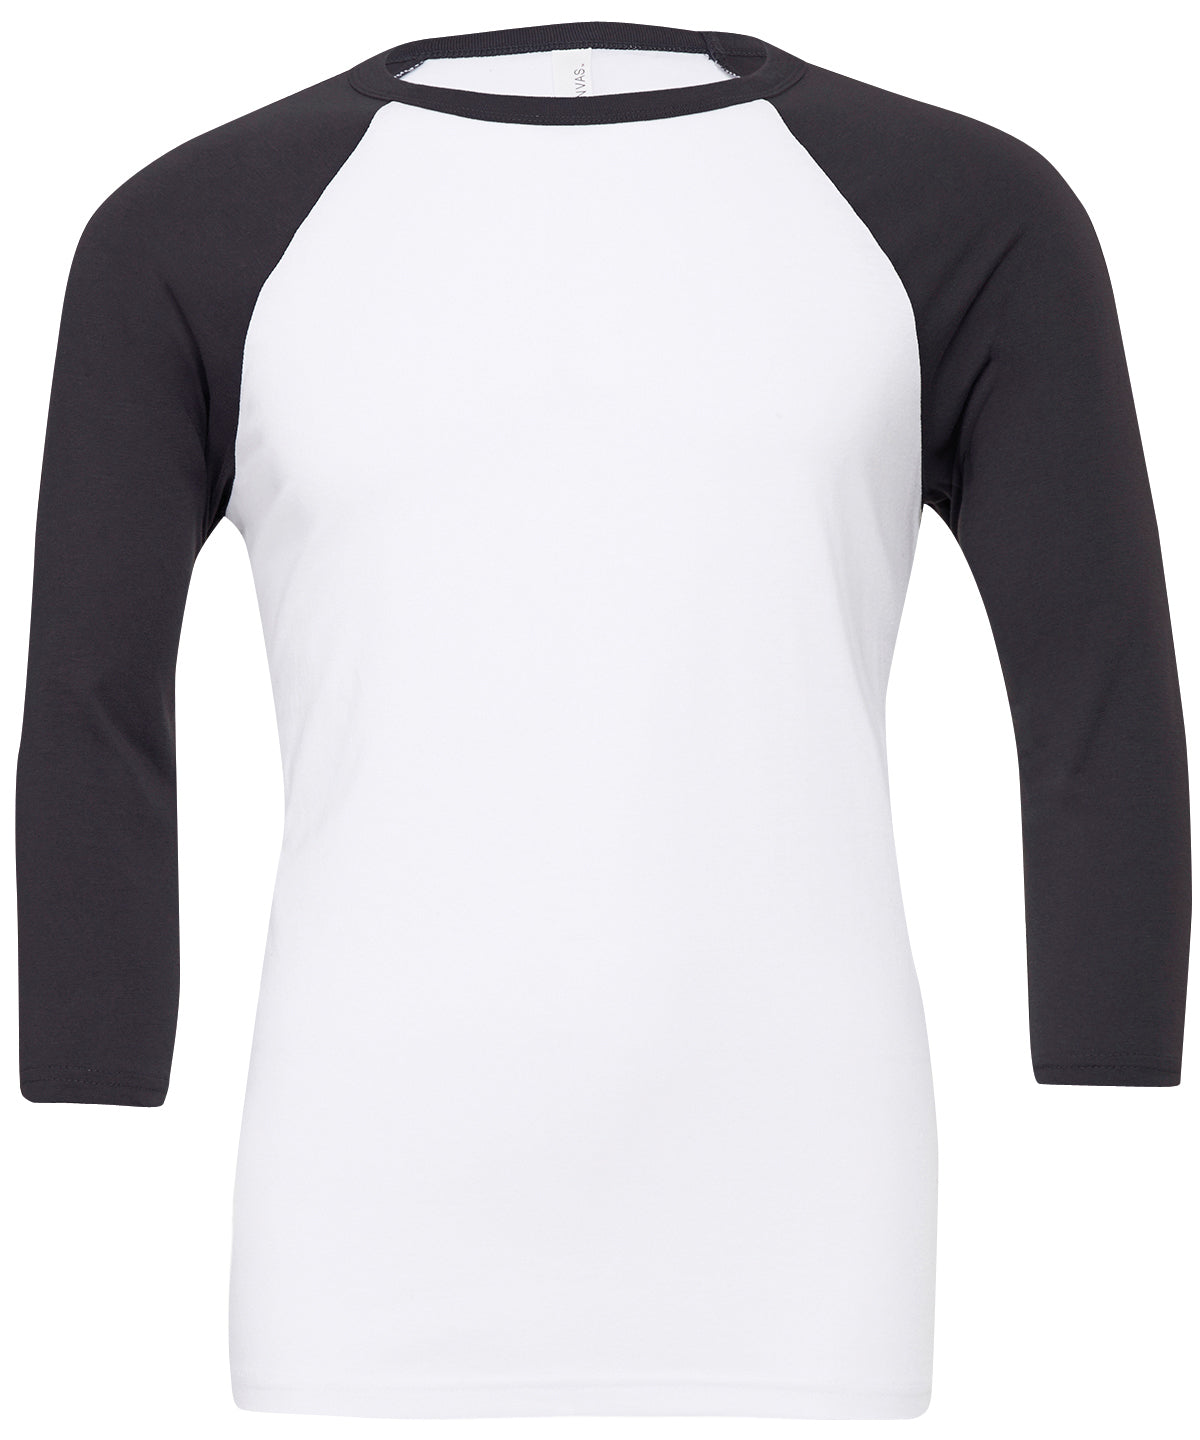 Personalised T-Shirts - Black Bella Canvas Unisex triblend ¾ sleeve baseball t-shirt